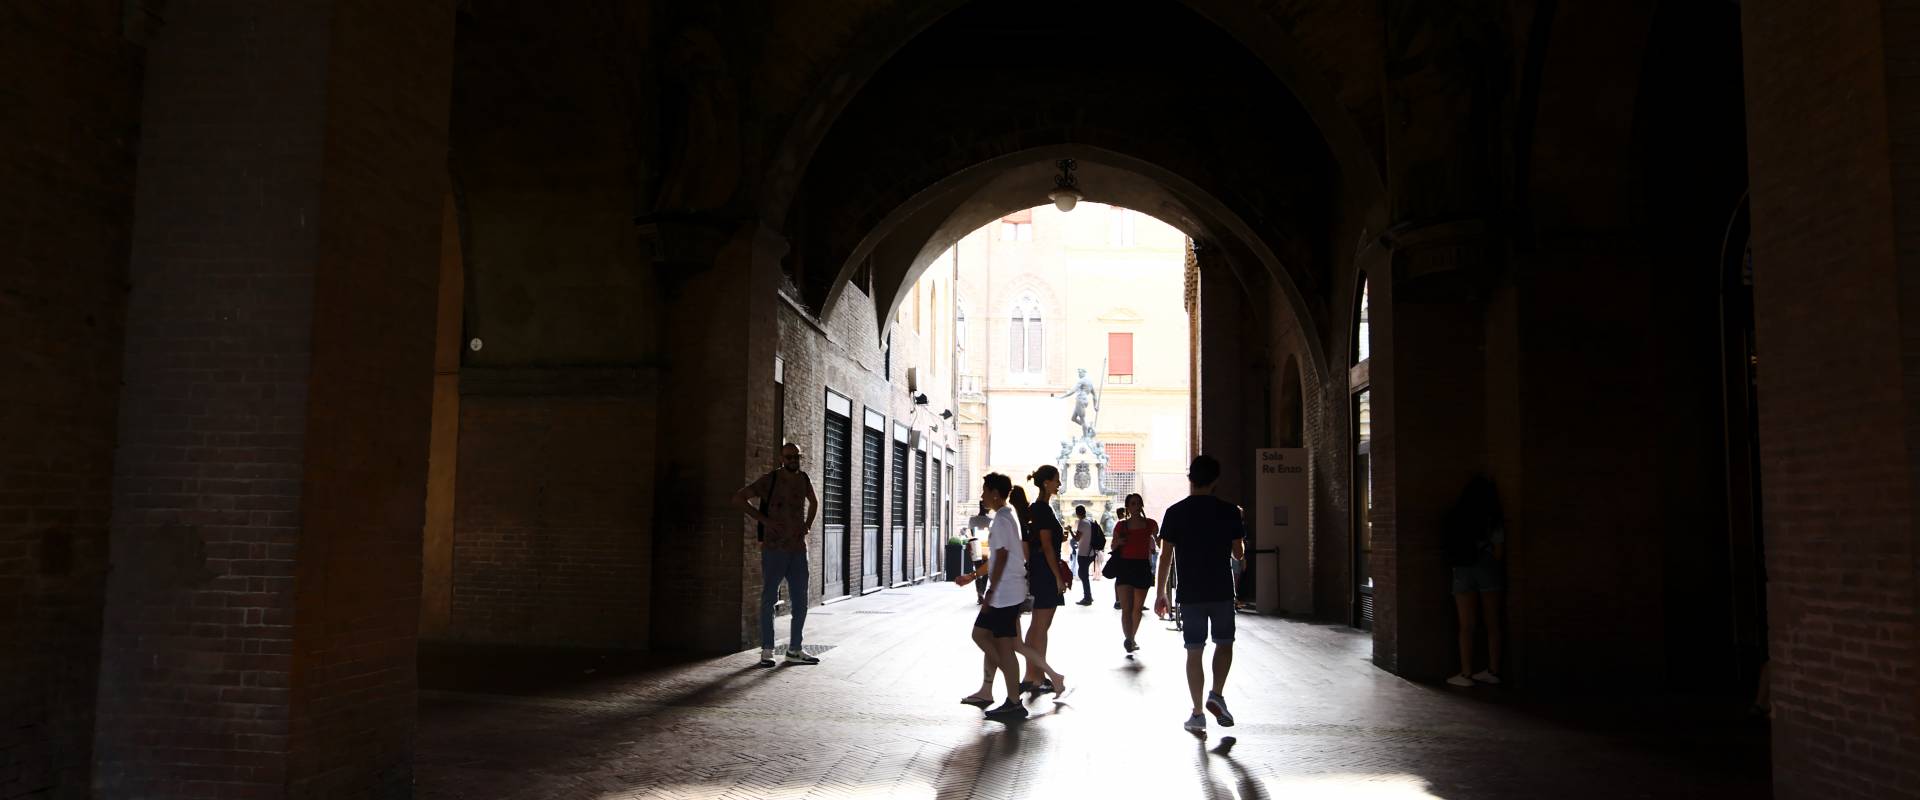 Arco di Palazzo Re Enzo photo by DavideAlberani